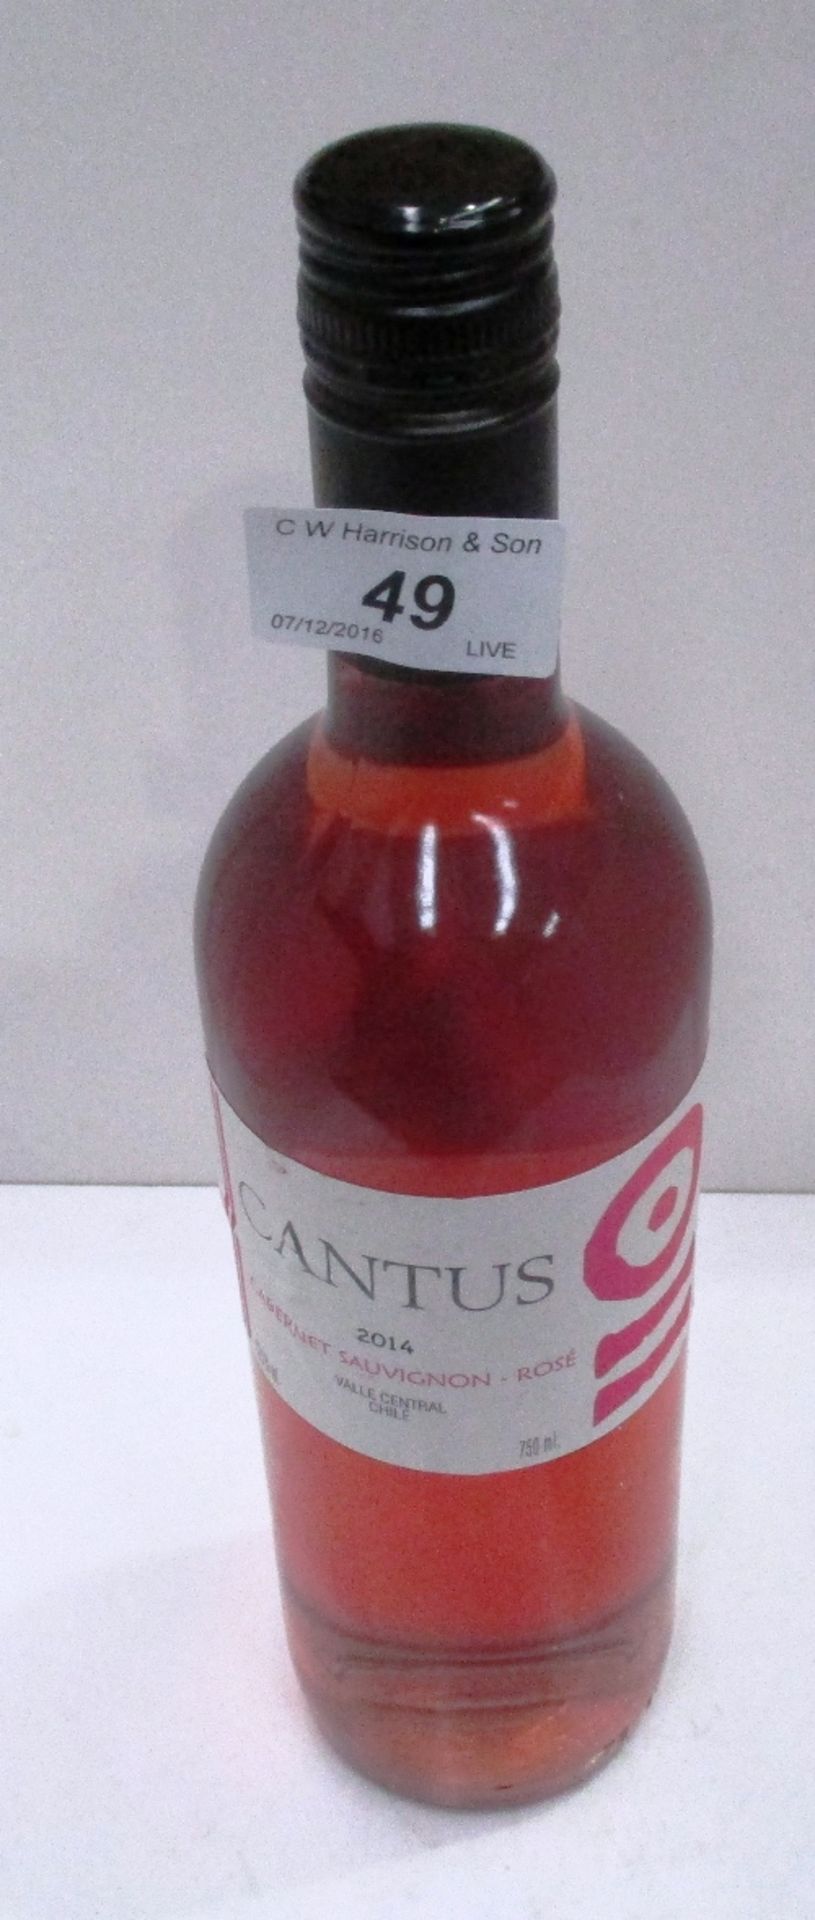 19 x 75cl bottles of Cantus Cabernet Sauvignon Rose Valle Central